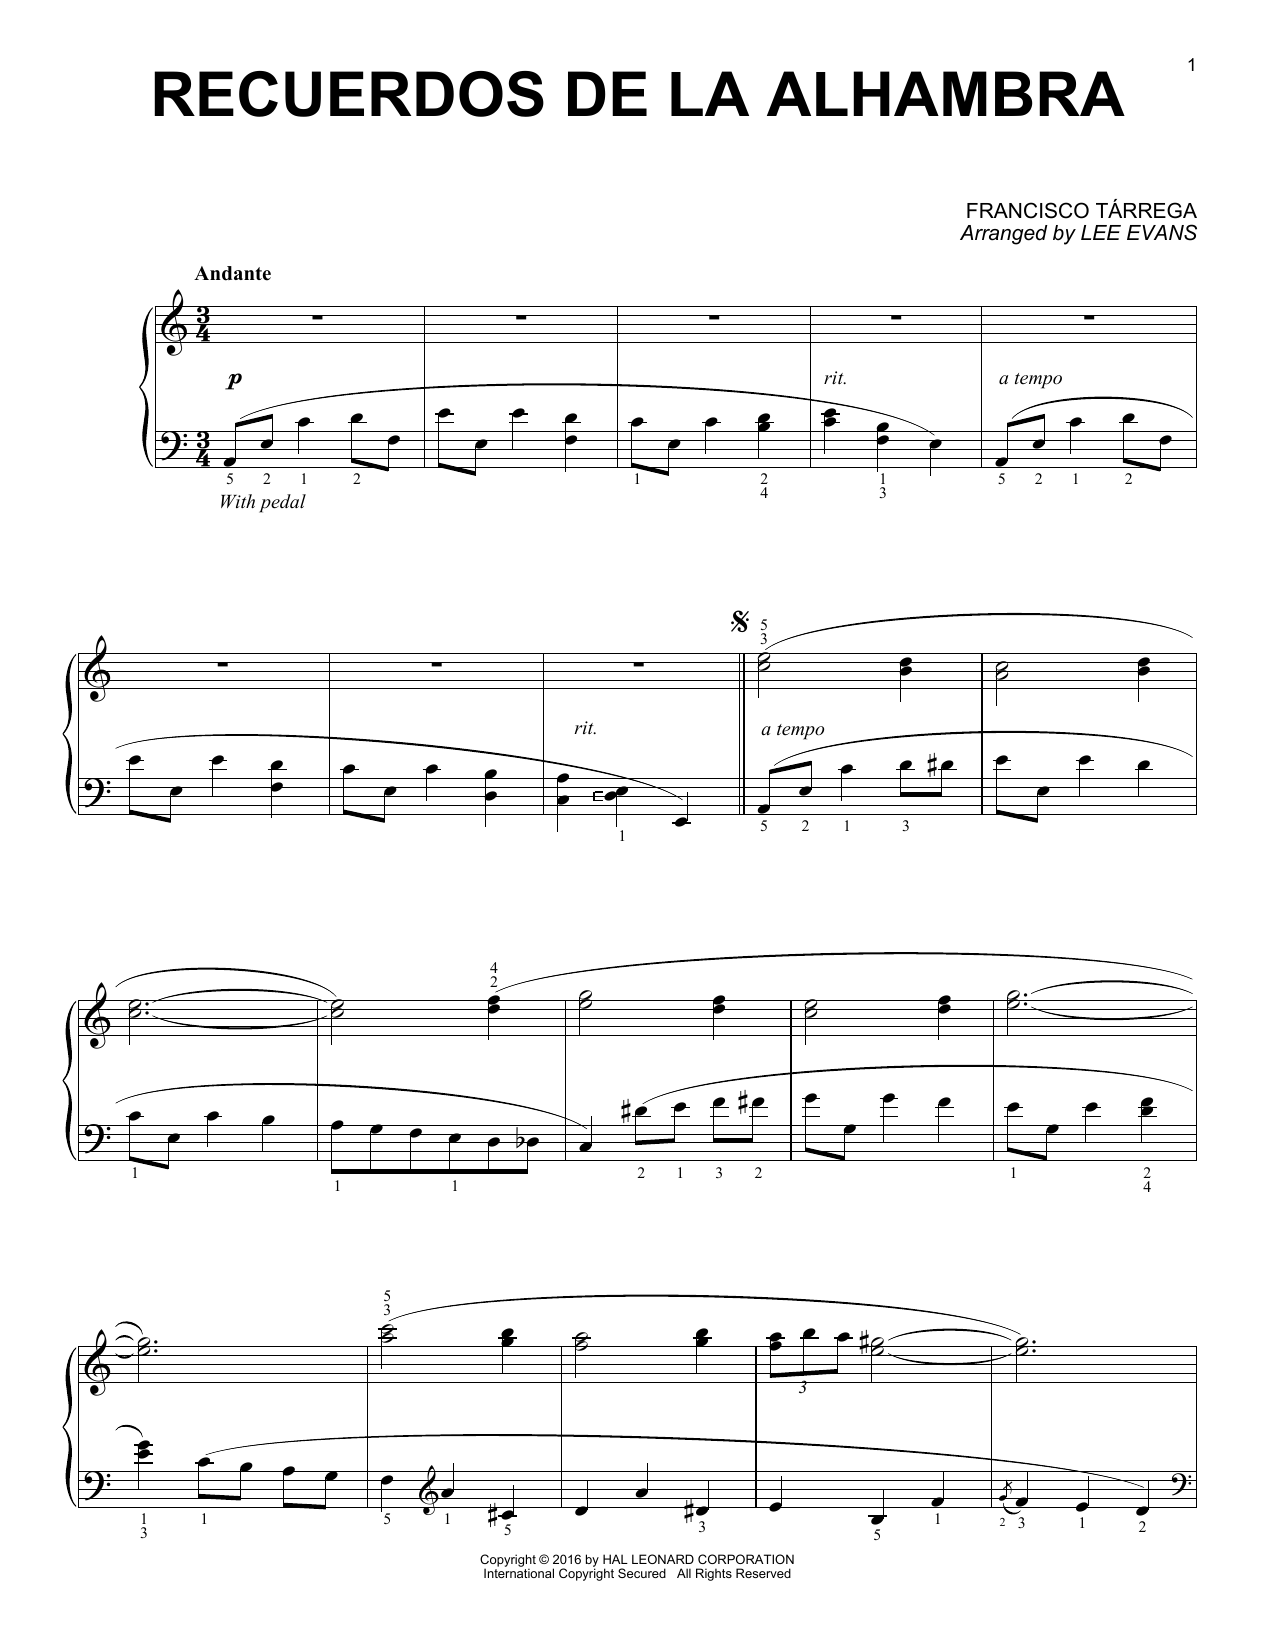 Lee Evans Recuerdos de la Alhambra Sheet Music Notes & Chords for Piano - Download or Print PDF